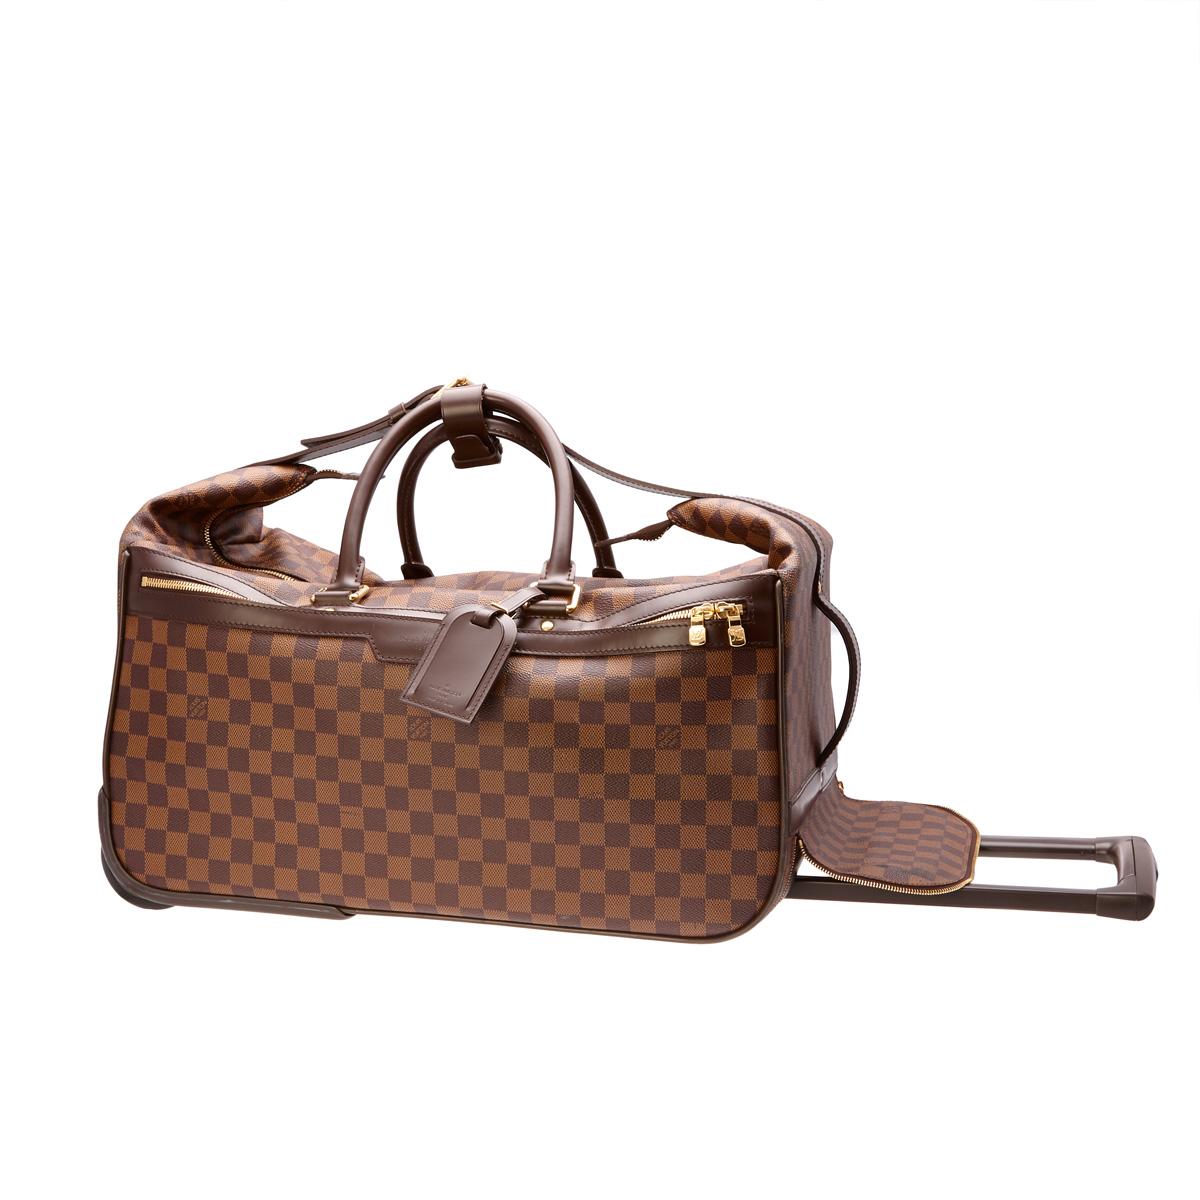 Sold at Auction: A Louis Vuitton Tahitienne Cabas GM handbag